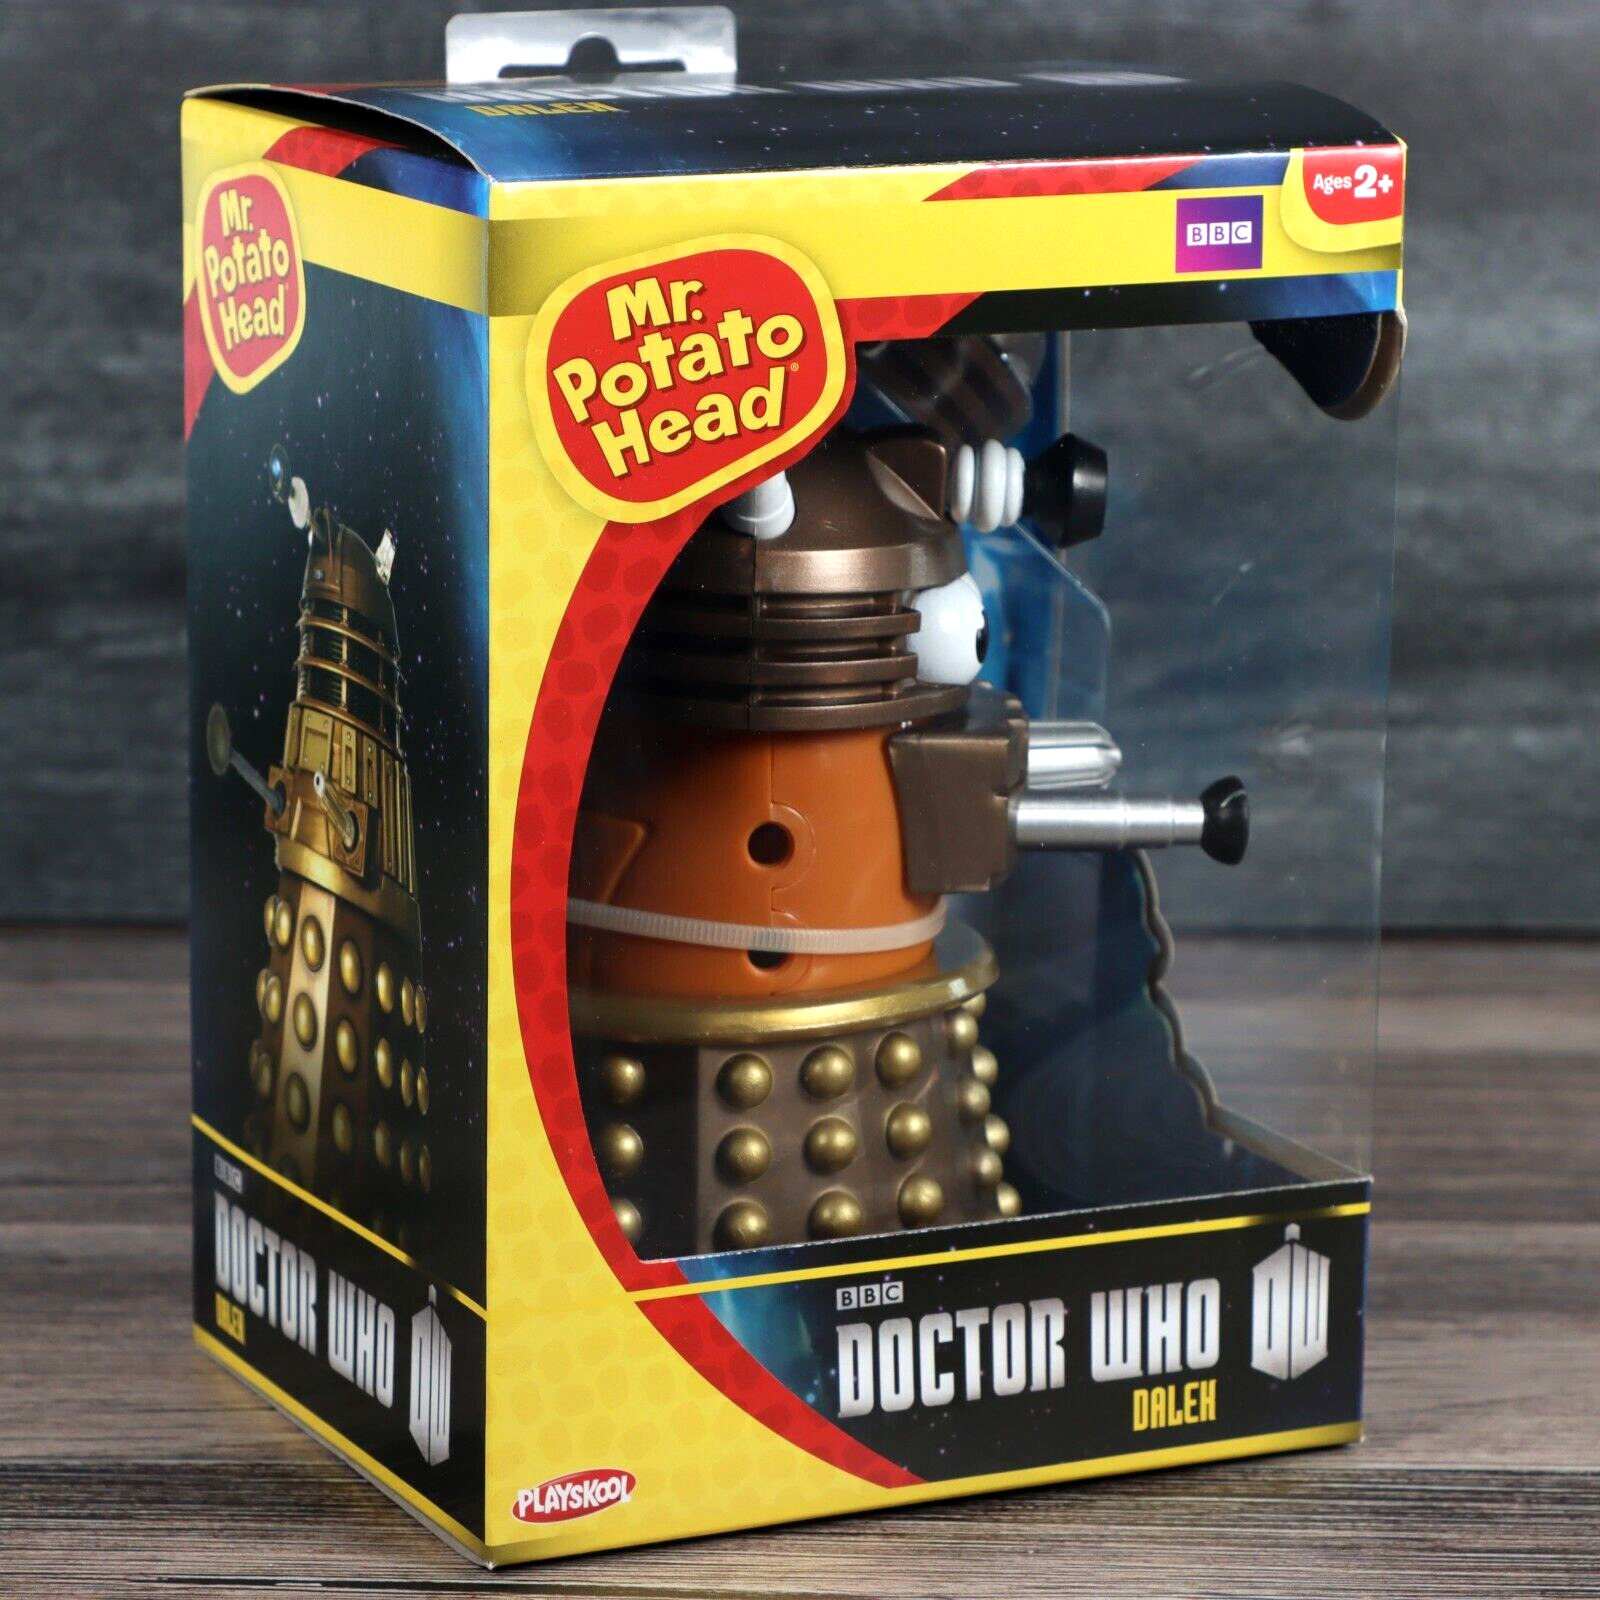 Doctor Who Dalek Mr. Potato Head Gold BBC Hasbro PPW Toys Playskool 2013 Sealed